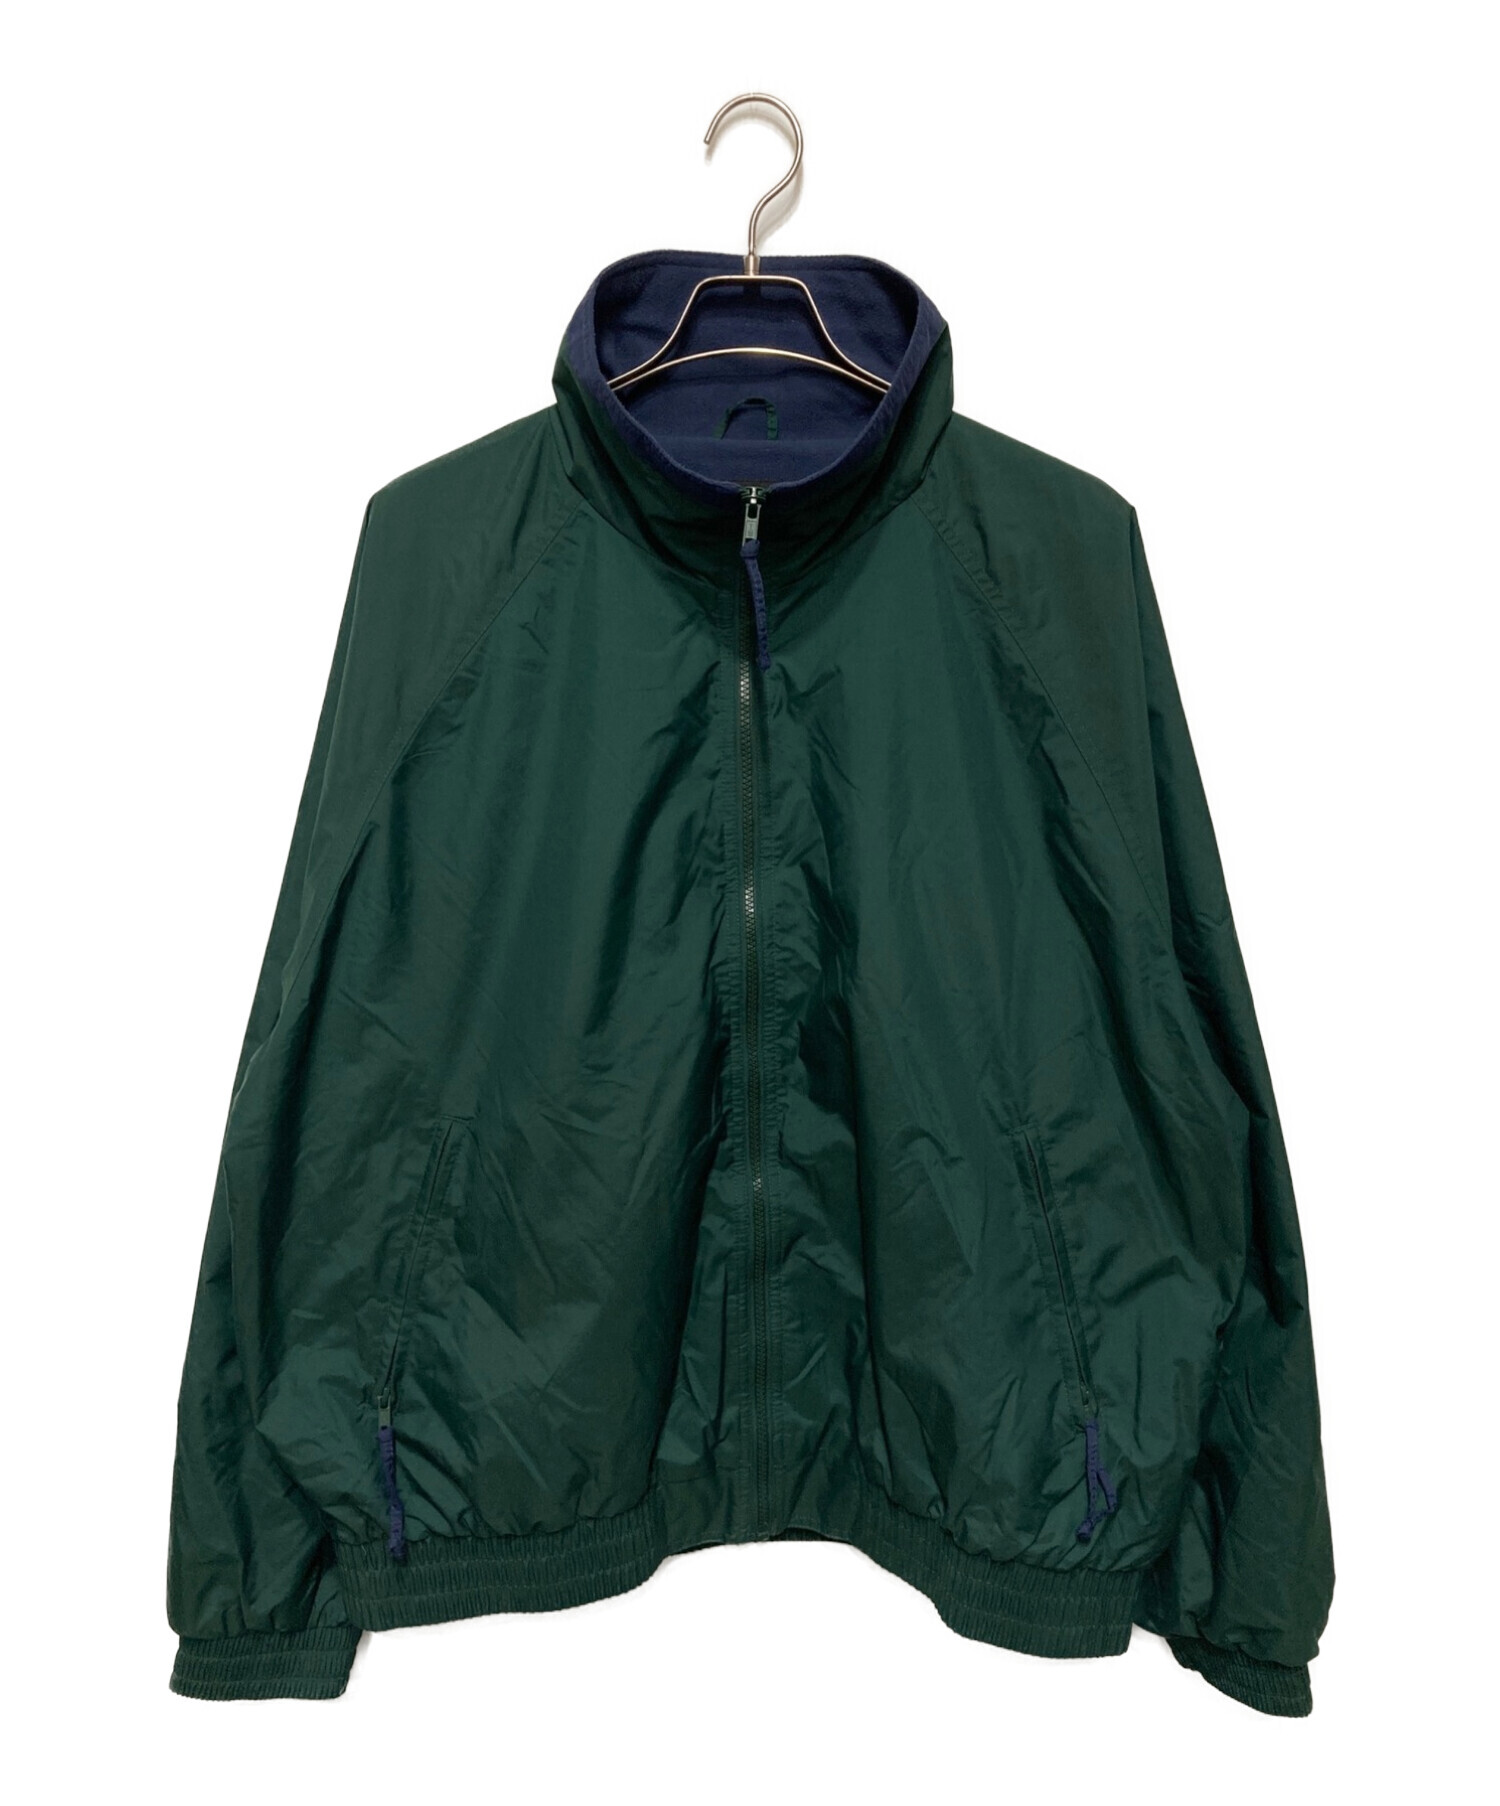 Tri Mountain (トライマウンテン) Volunteer jacket グリーン サイズ:XL